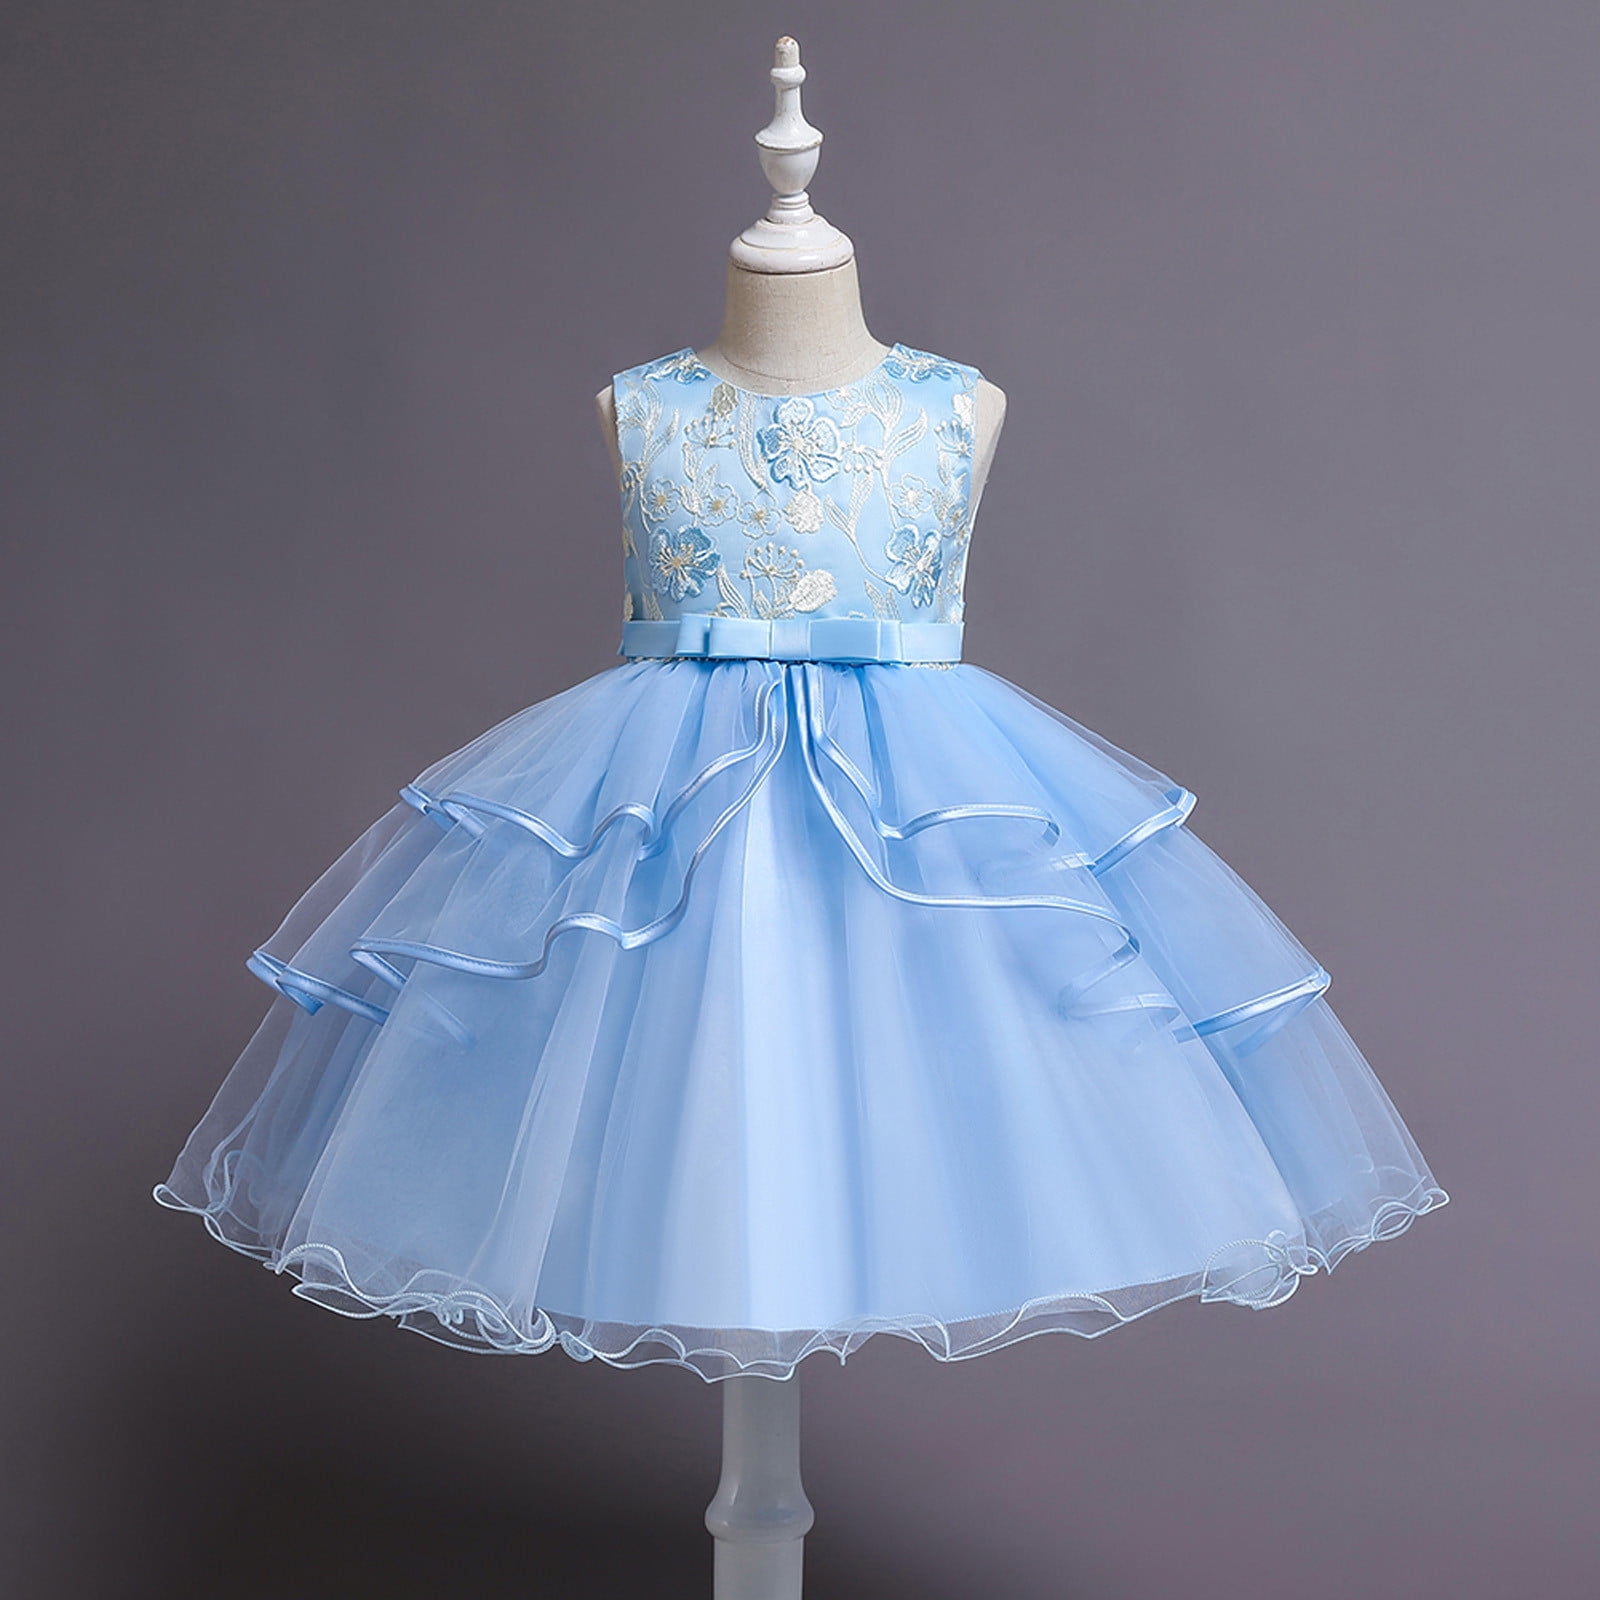 Iuhan Baby Kids Girls Sundress Playsuit Toddler Print Sleeveless Tassels Party Princess Dresses Clothes 